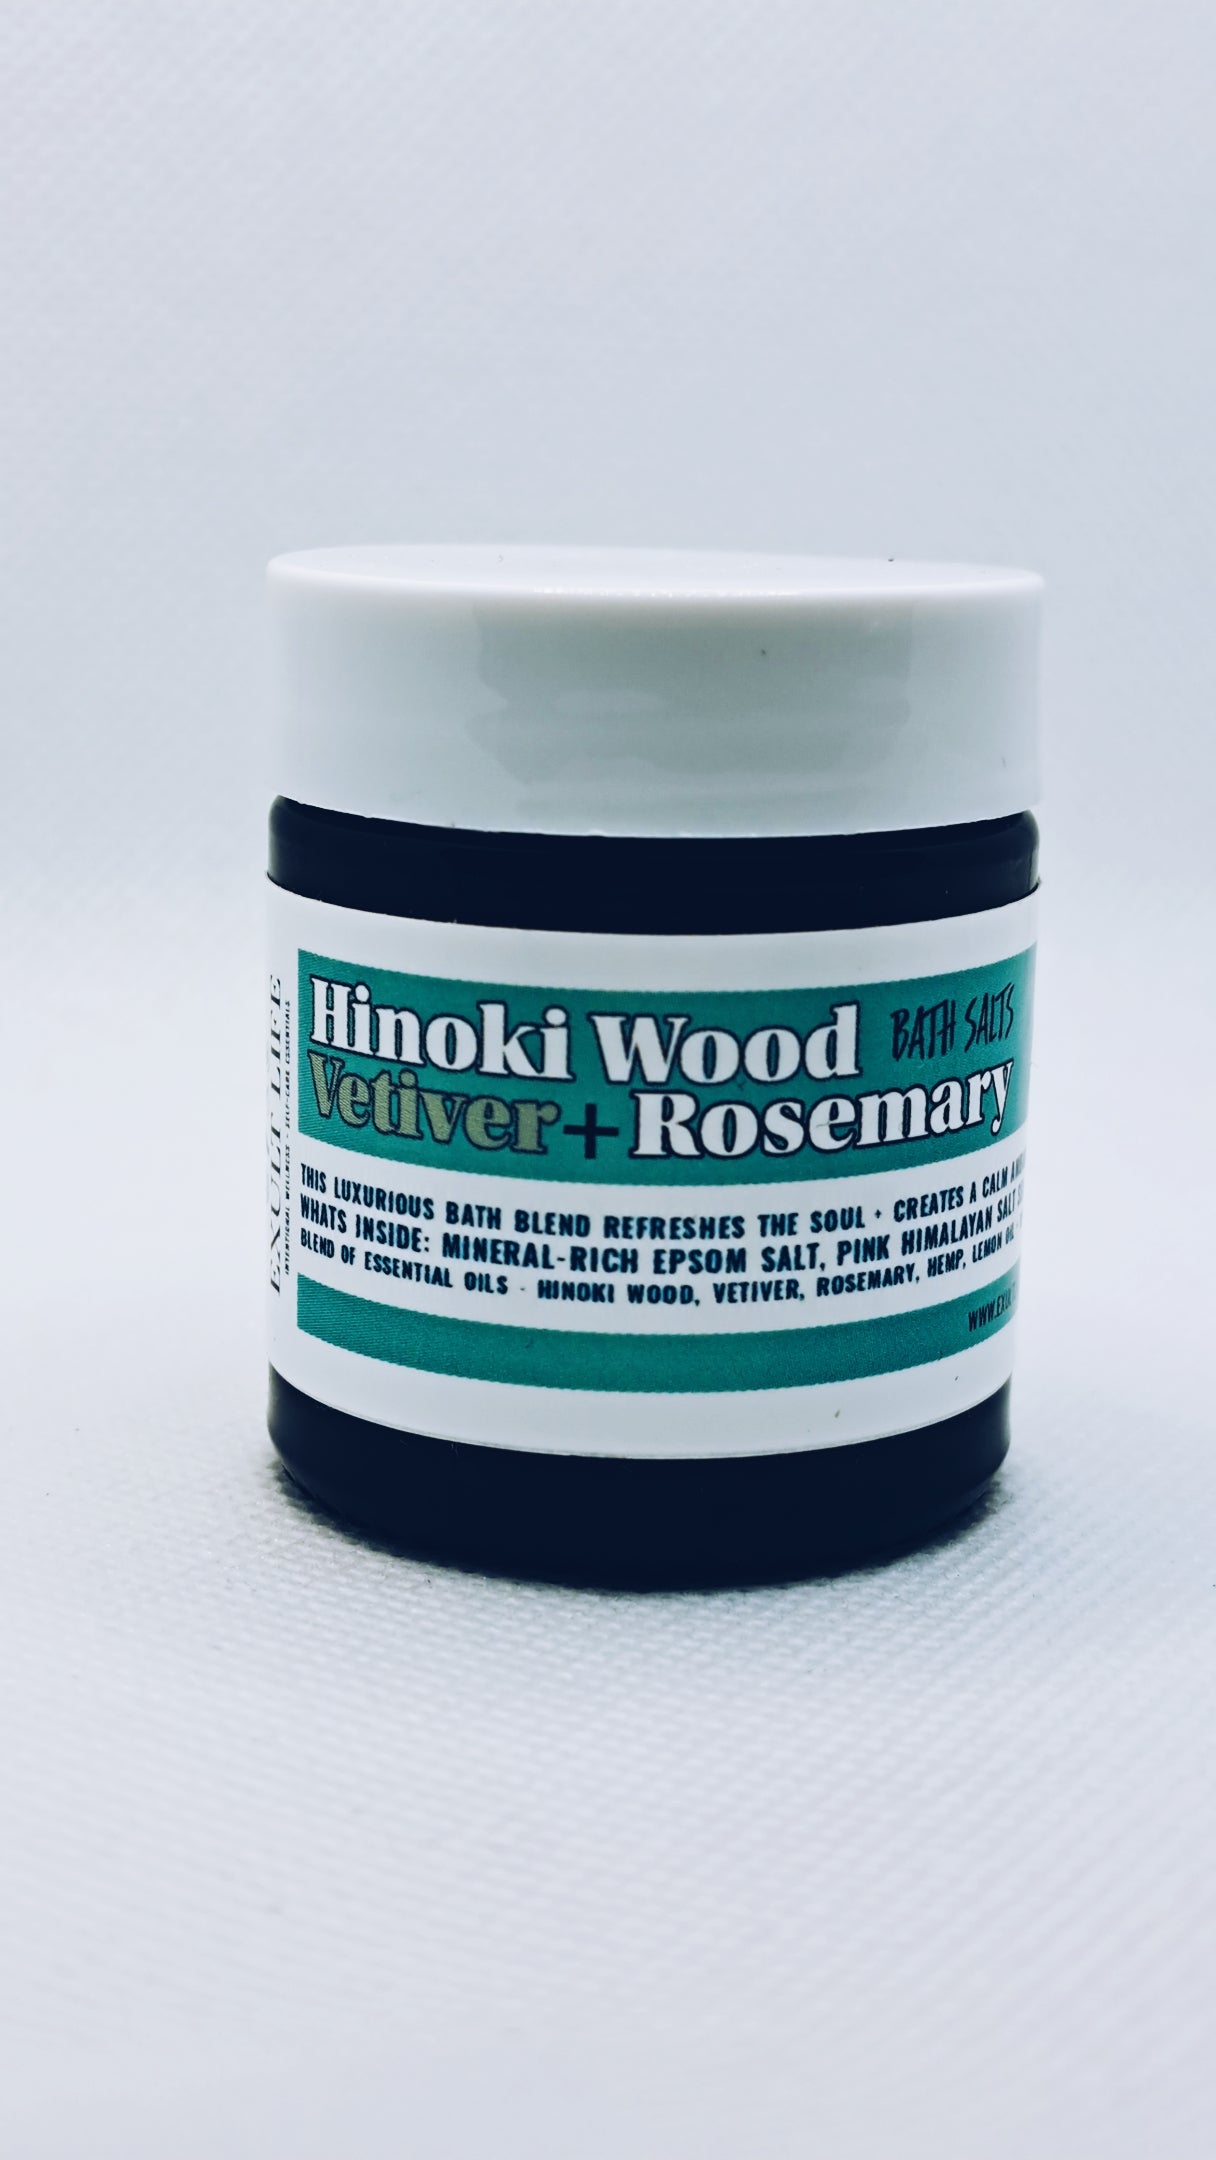 Single use, 1 ounce jar of Hinoki Wood, vetiver and rosemary bath salt.